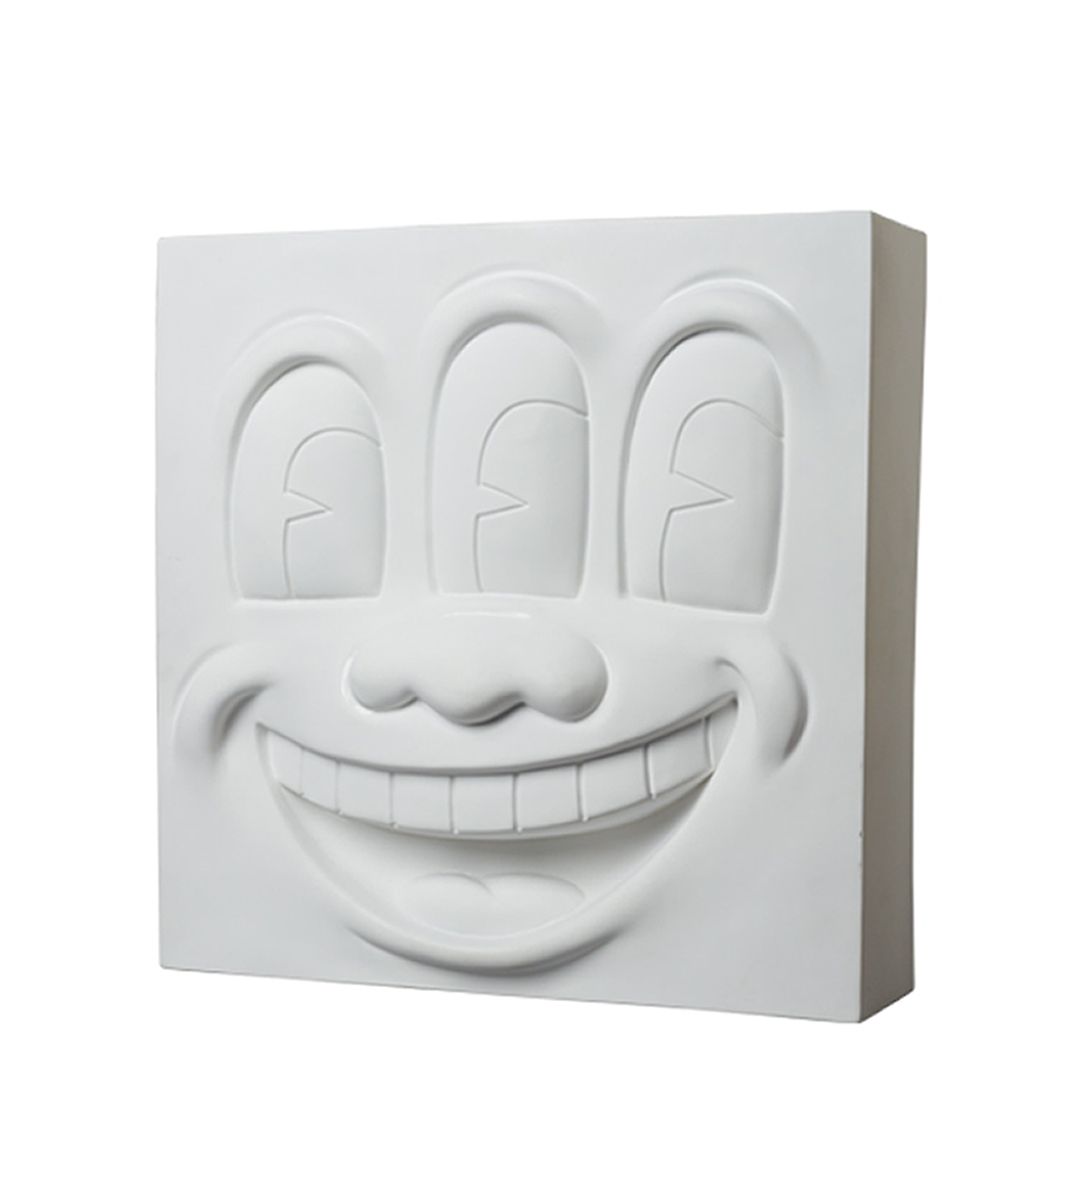 Three Eyed Smiling Face - Keith Haring X Medicom Toy